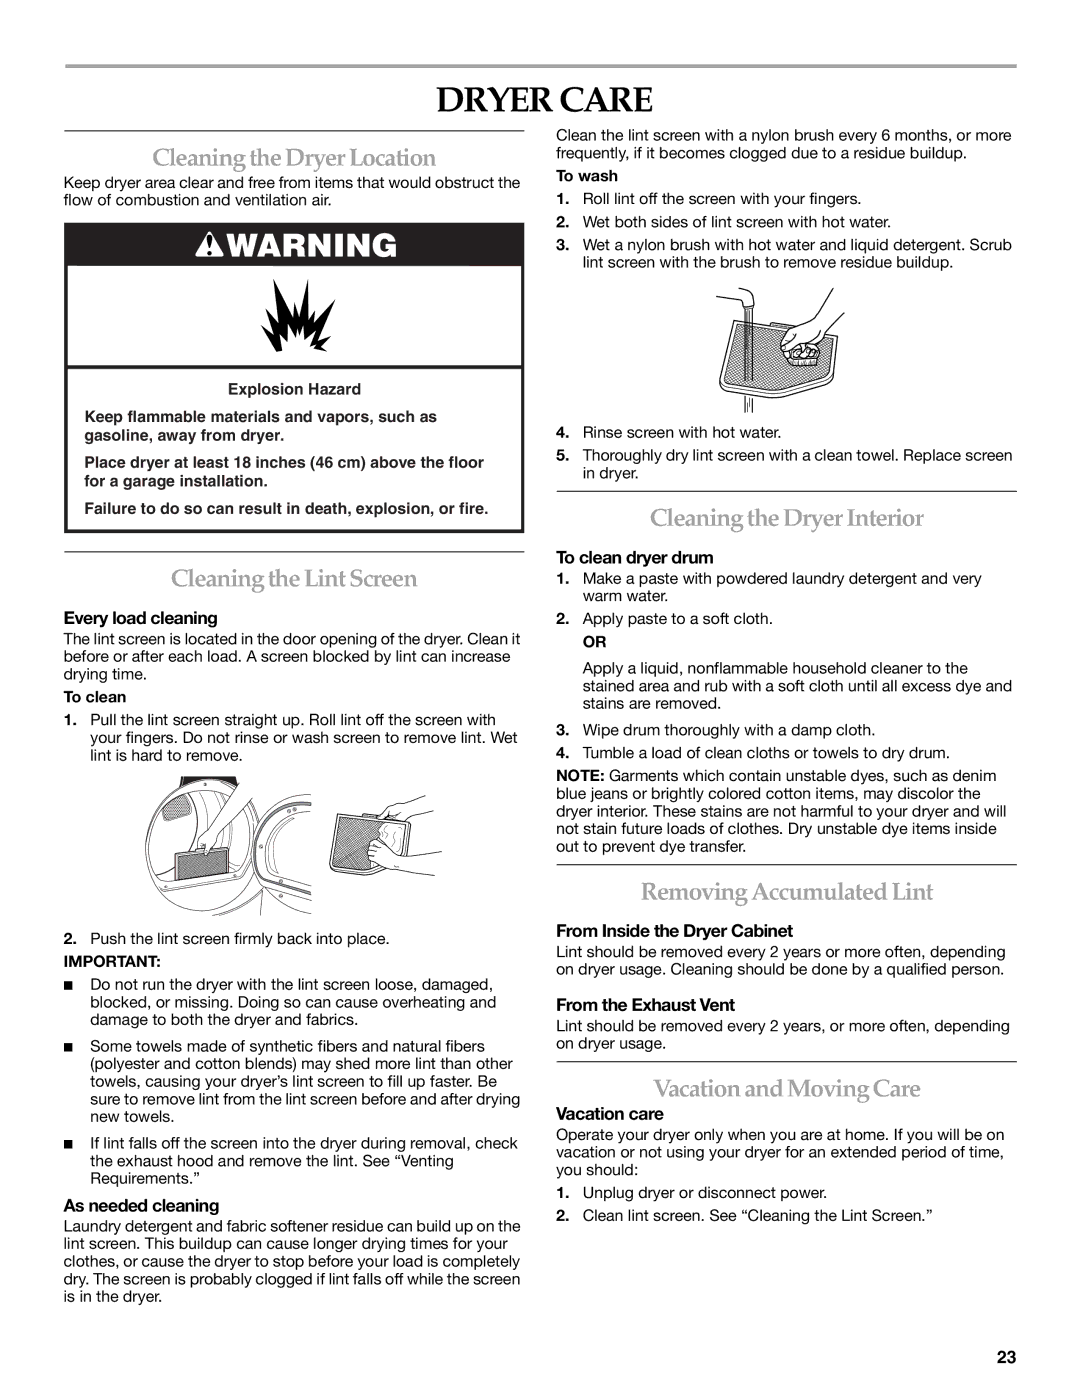 KitchenAid YKEHS01P manual Dryer Care 